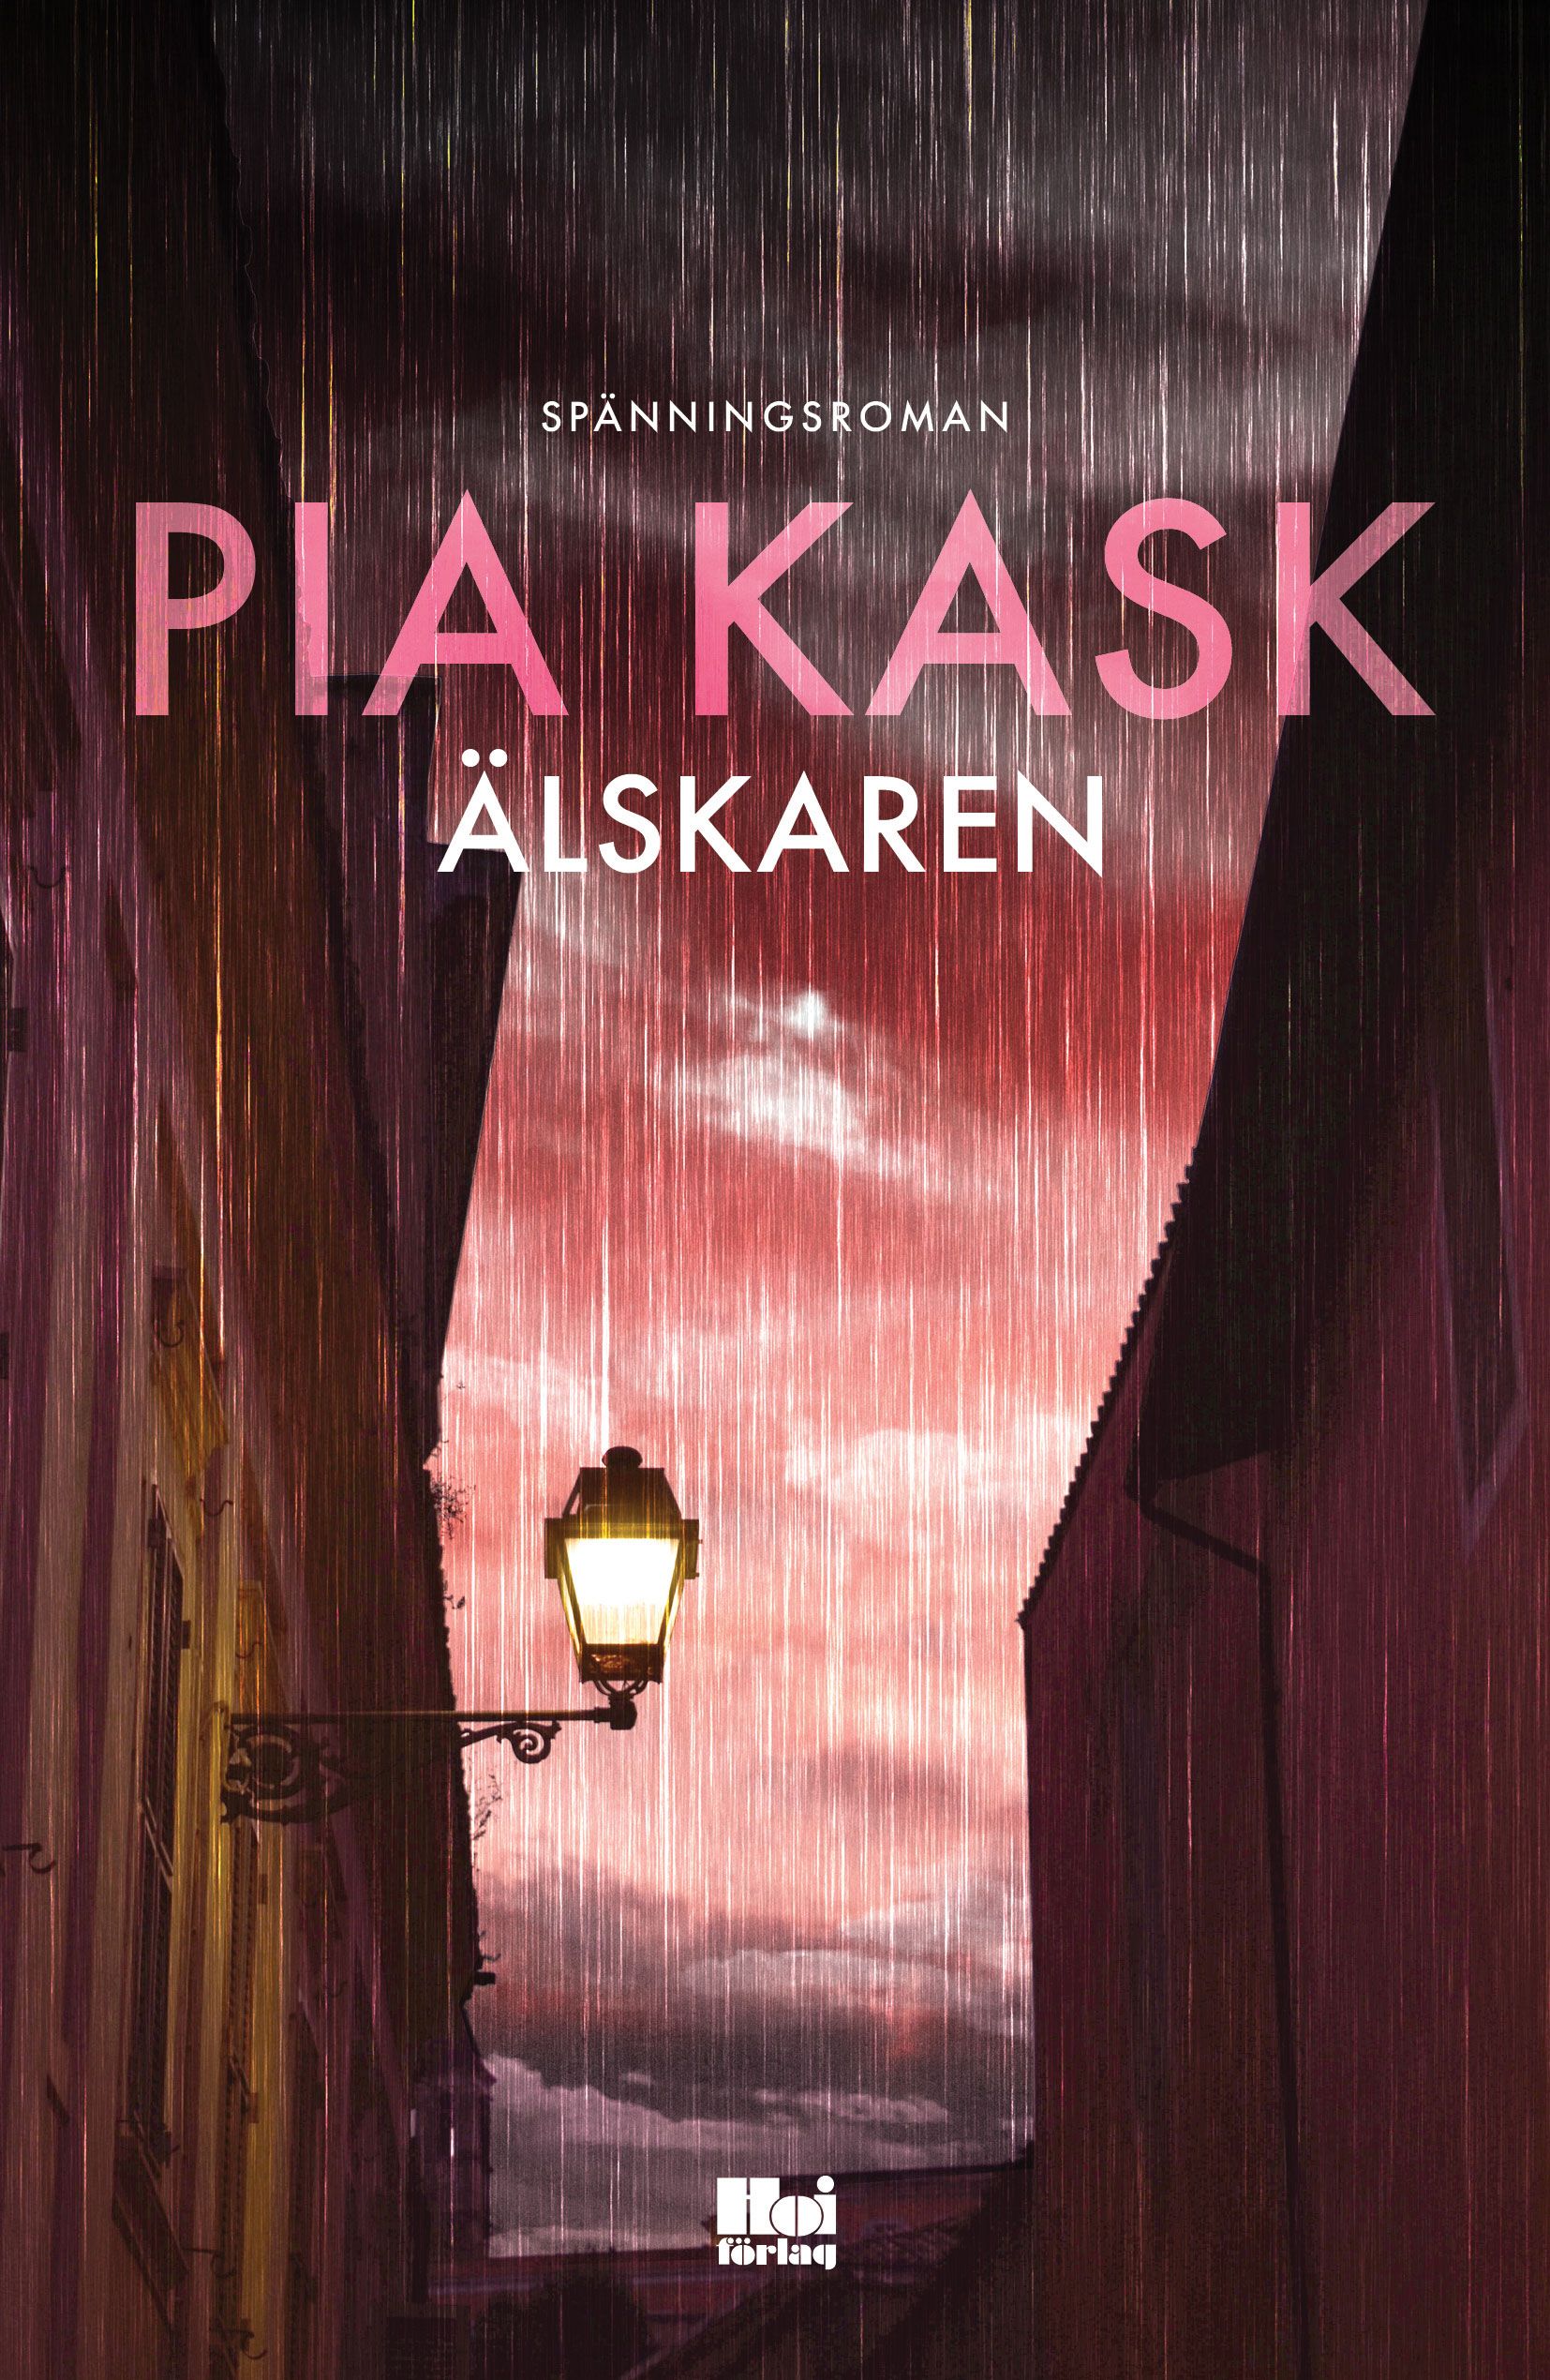 Älskaren, eBook by Pia Kask